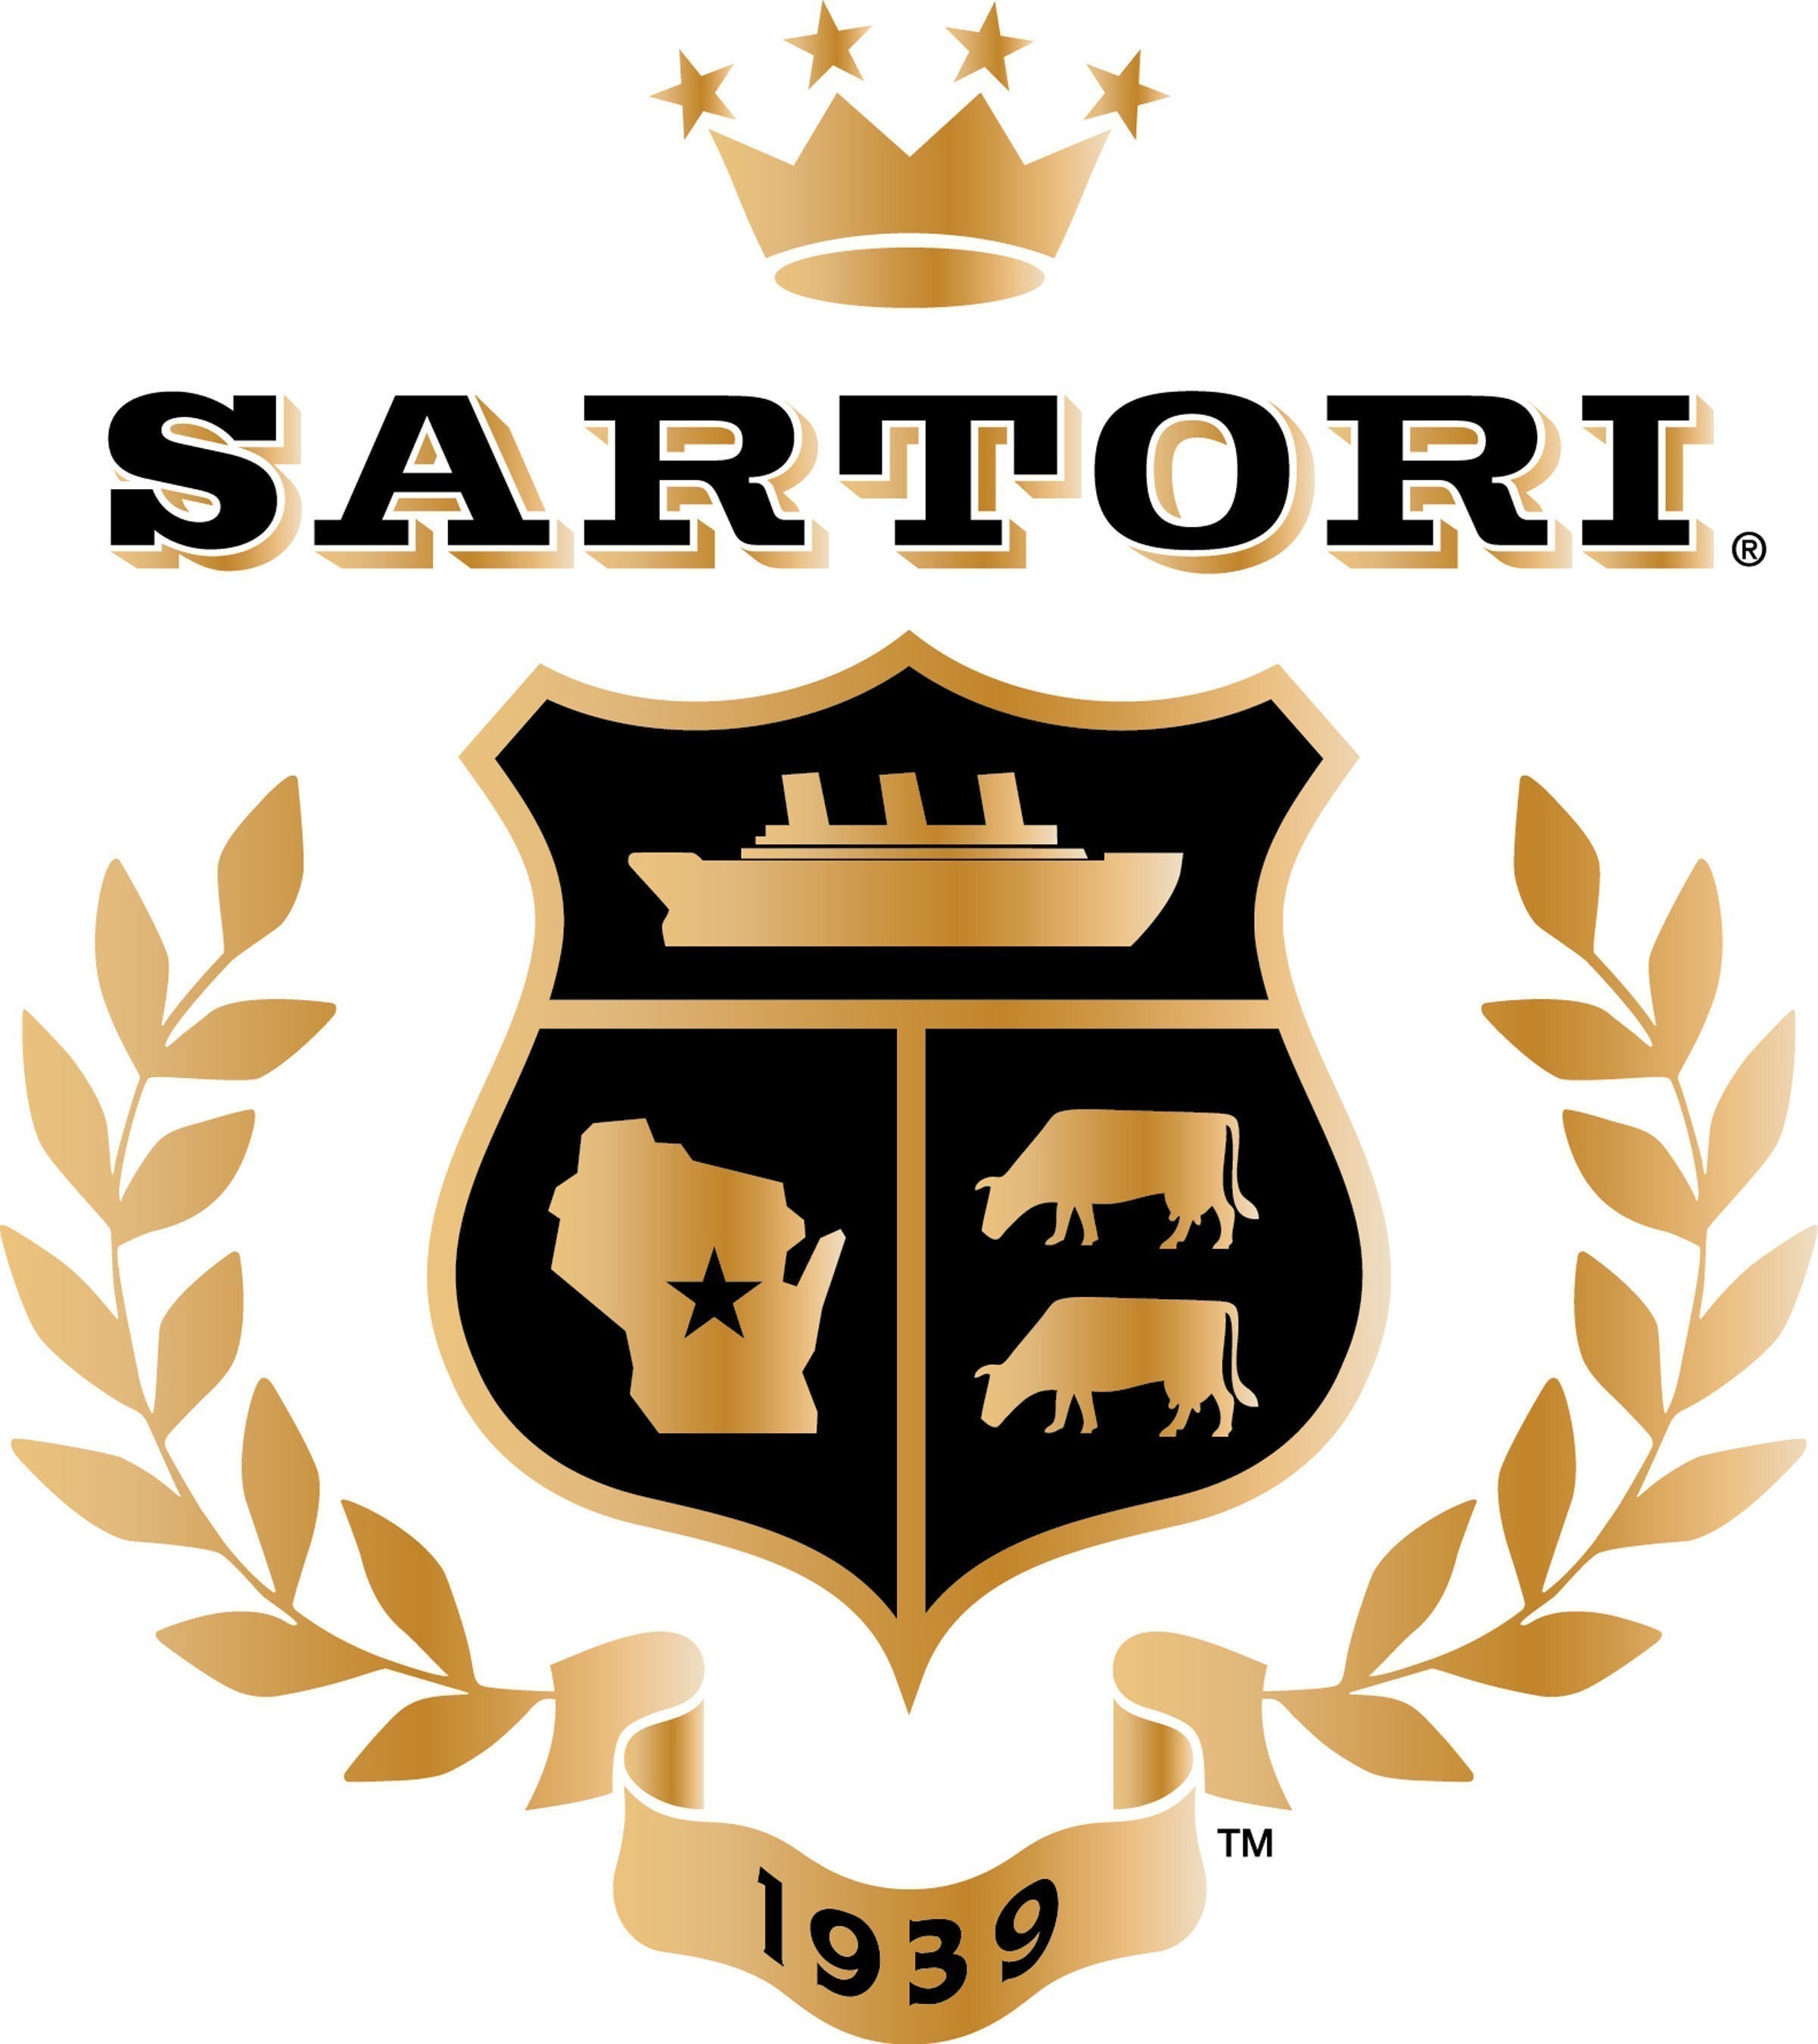 Sartori Company logo.